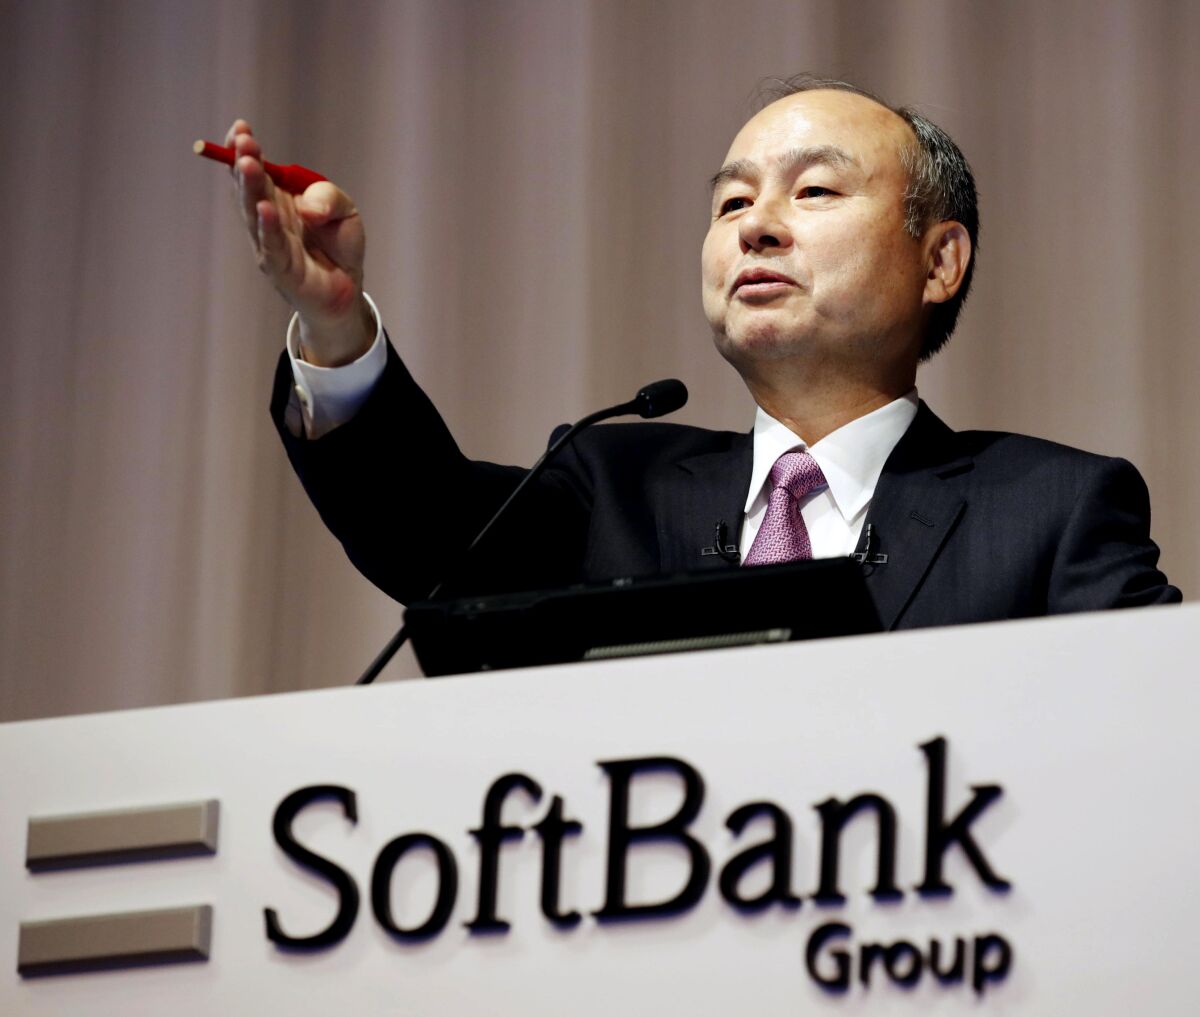 SoftBank founder and CEO Masayoshi Son